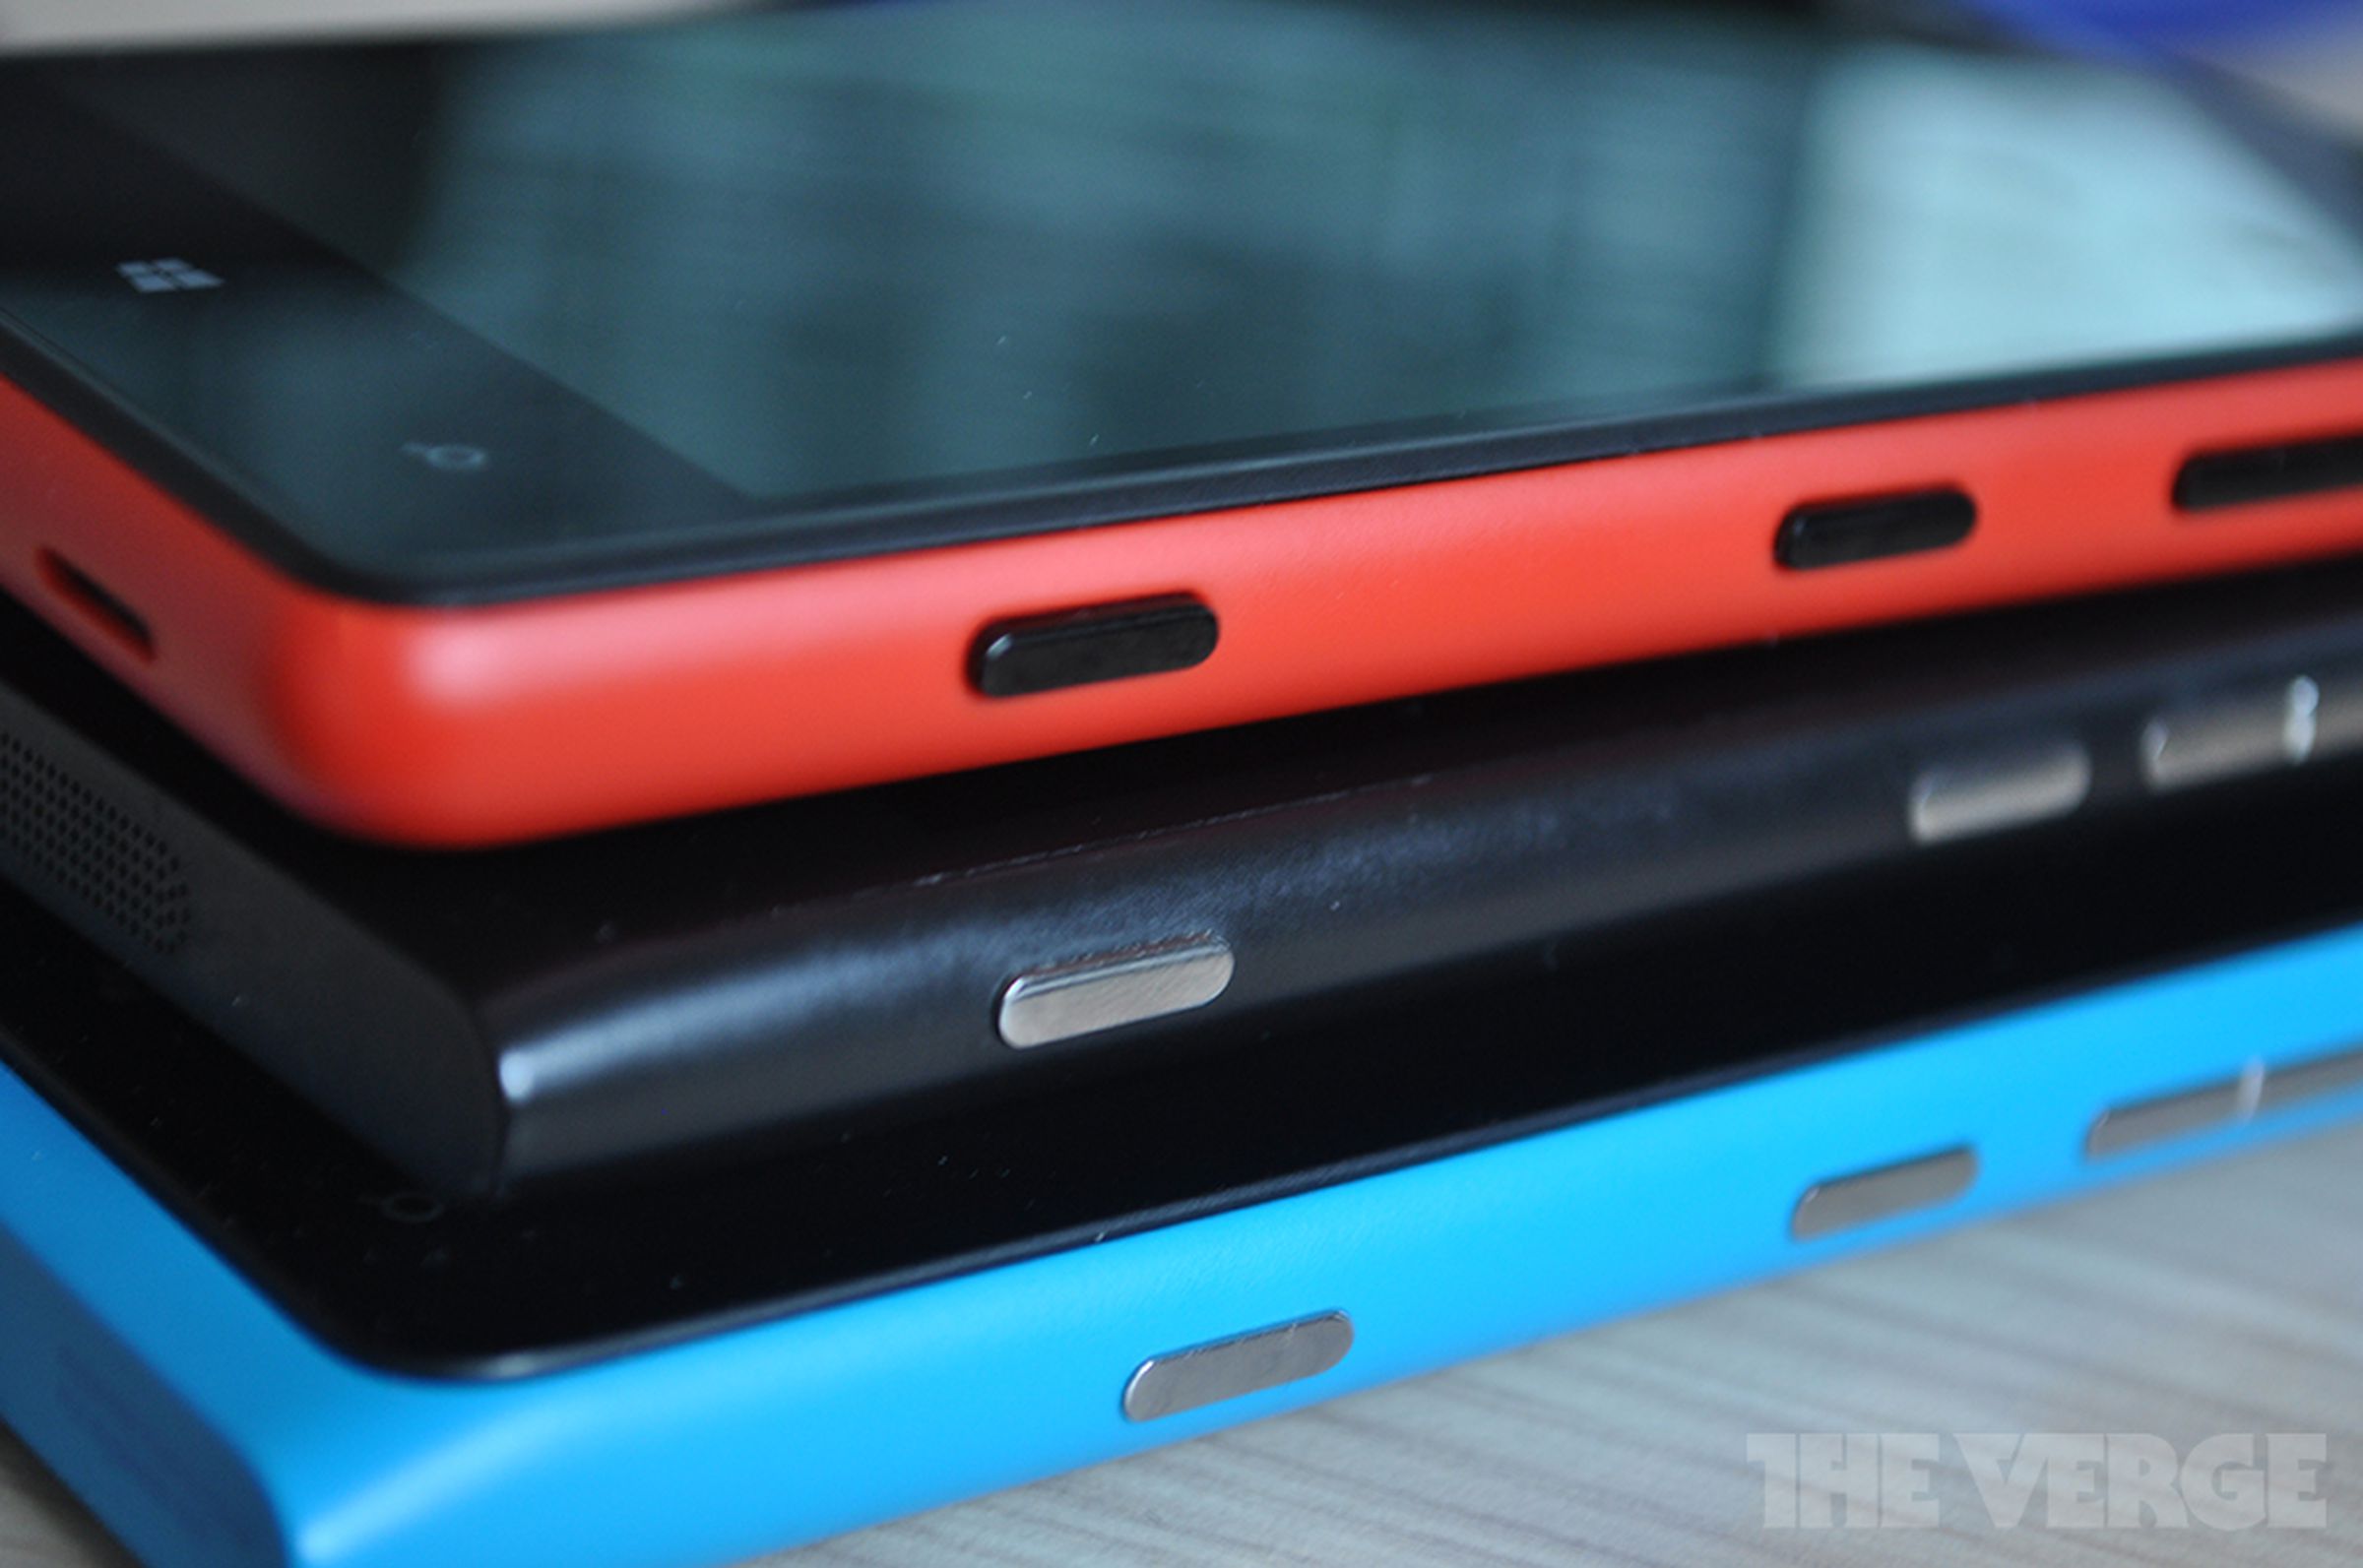 Nokia Lumia 820 pictures